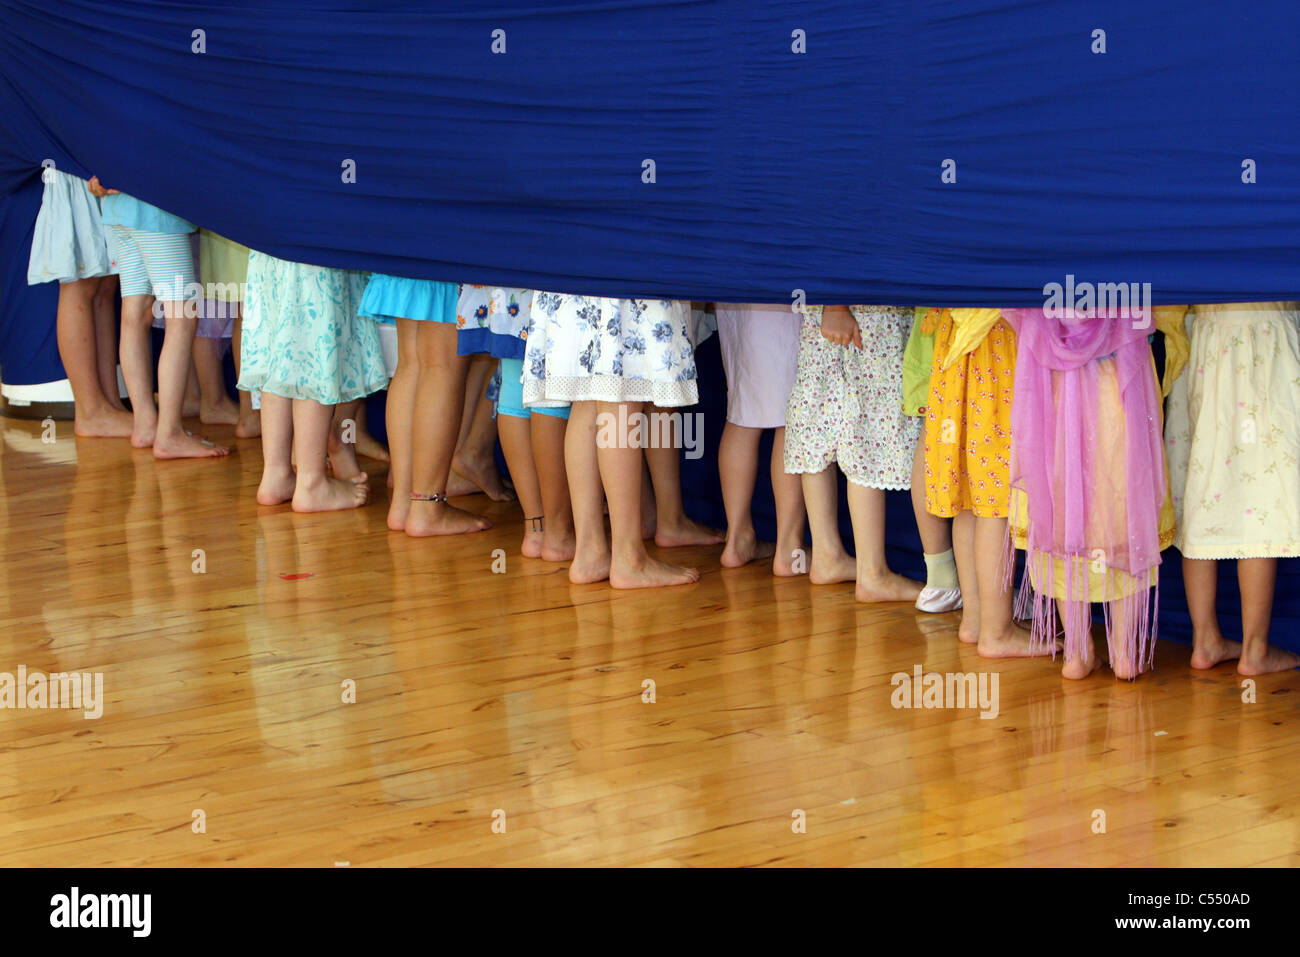 Children hiding behind a blue curtain Stock Photo